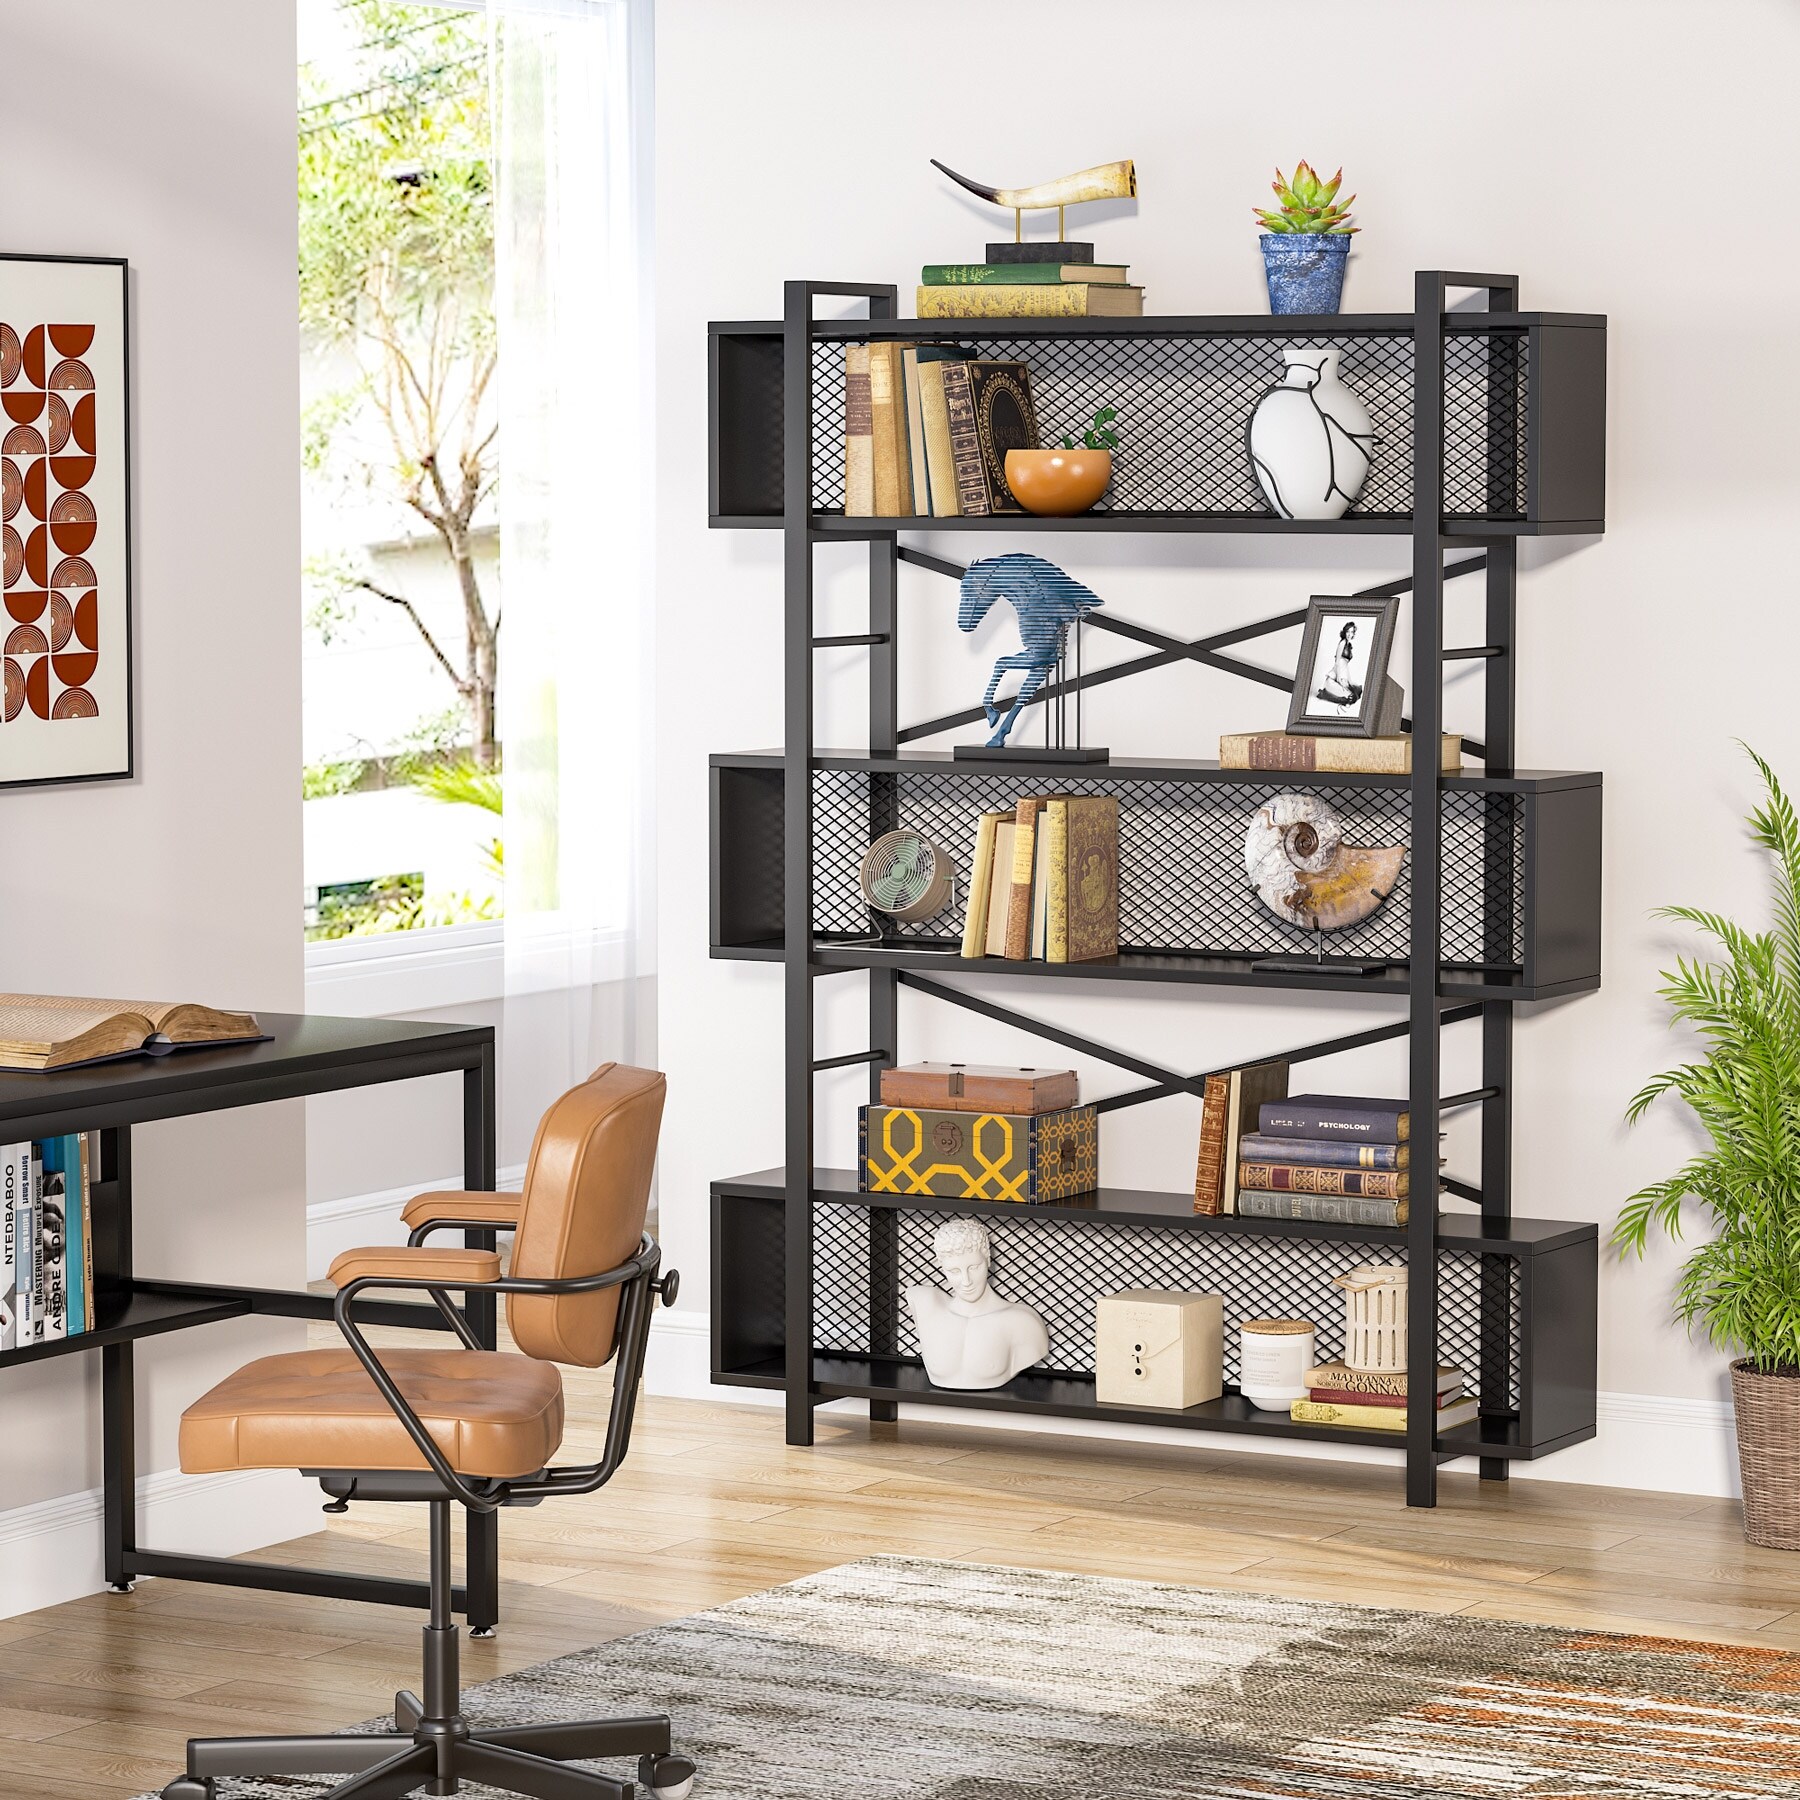 Details about   6 Tier Wood Bookshelf Organizer Bookcase Shelving Storage Display Rack Shelf_NEW 